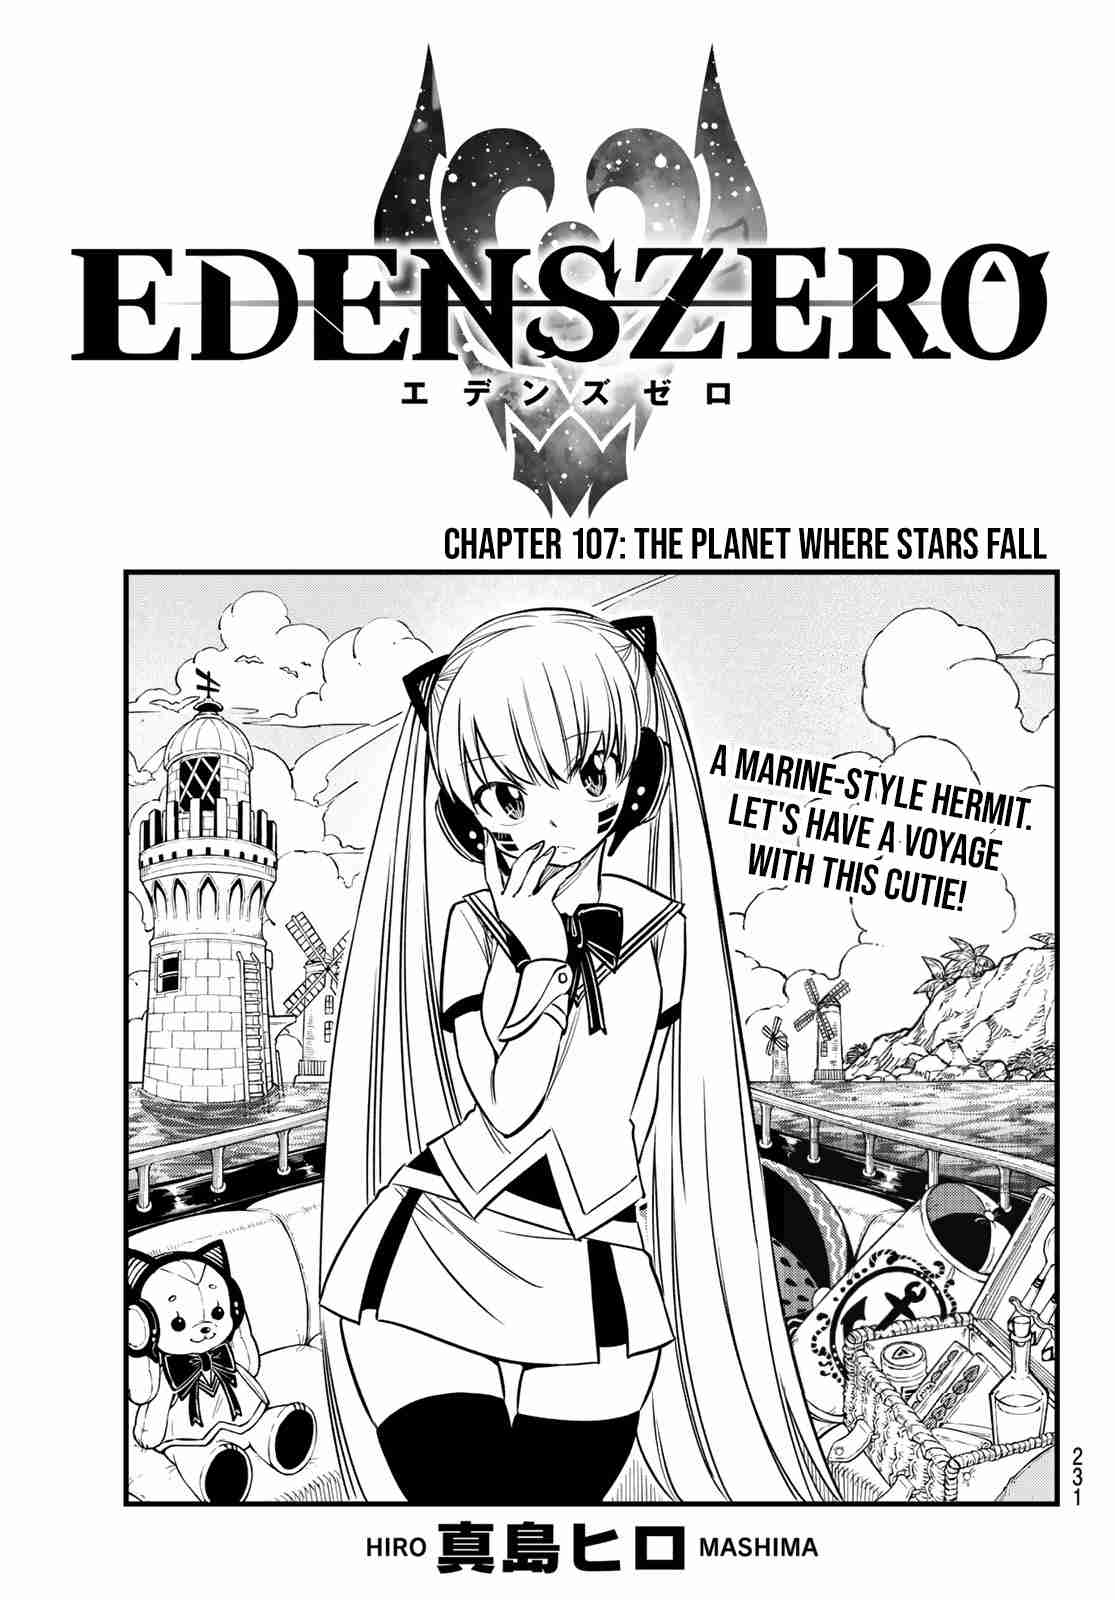 Edens Zero Ch. 107 The Planet Where Stars Fall